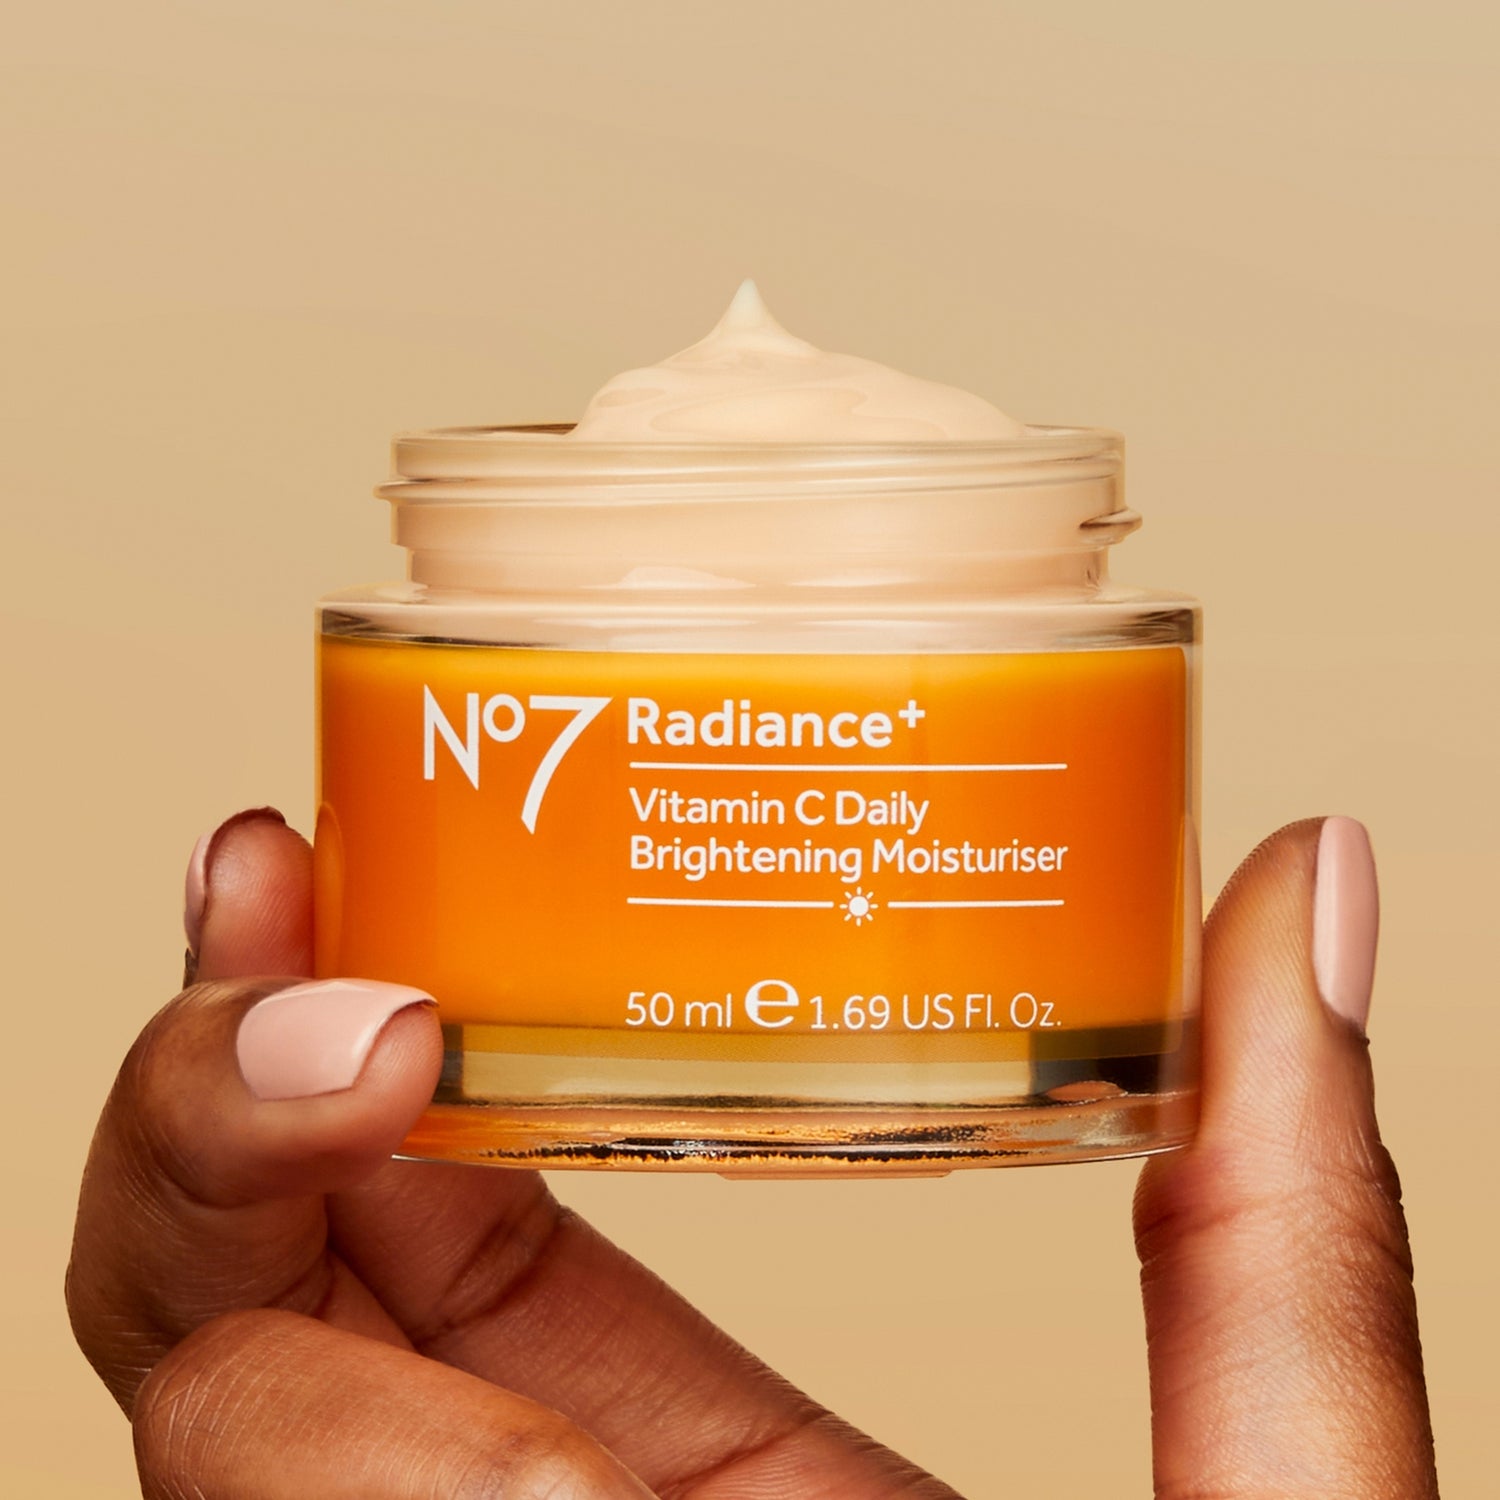 Radiance+ Vitamin C Daily Brightening Moisturiser, anti-ageing, hyaluronic acid, skin strengthening